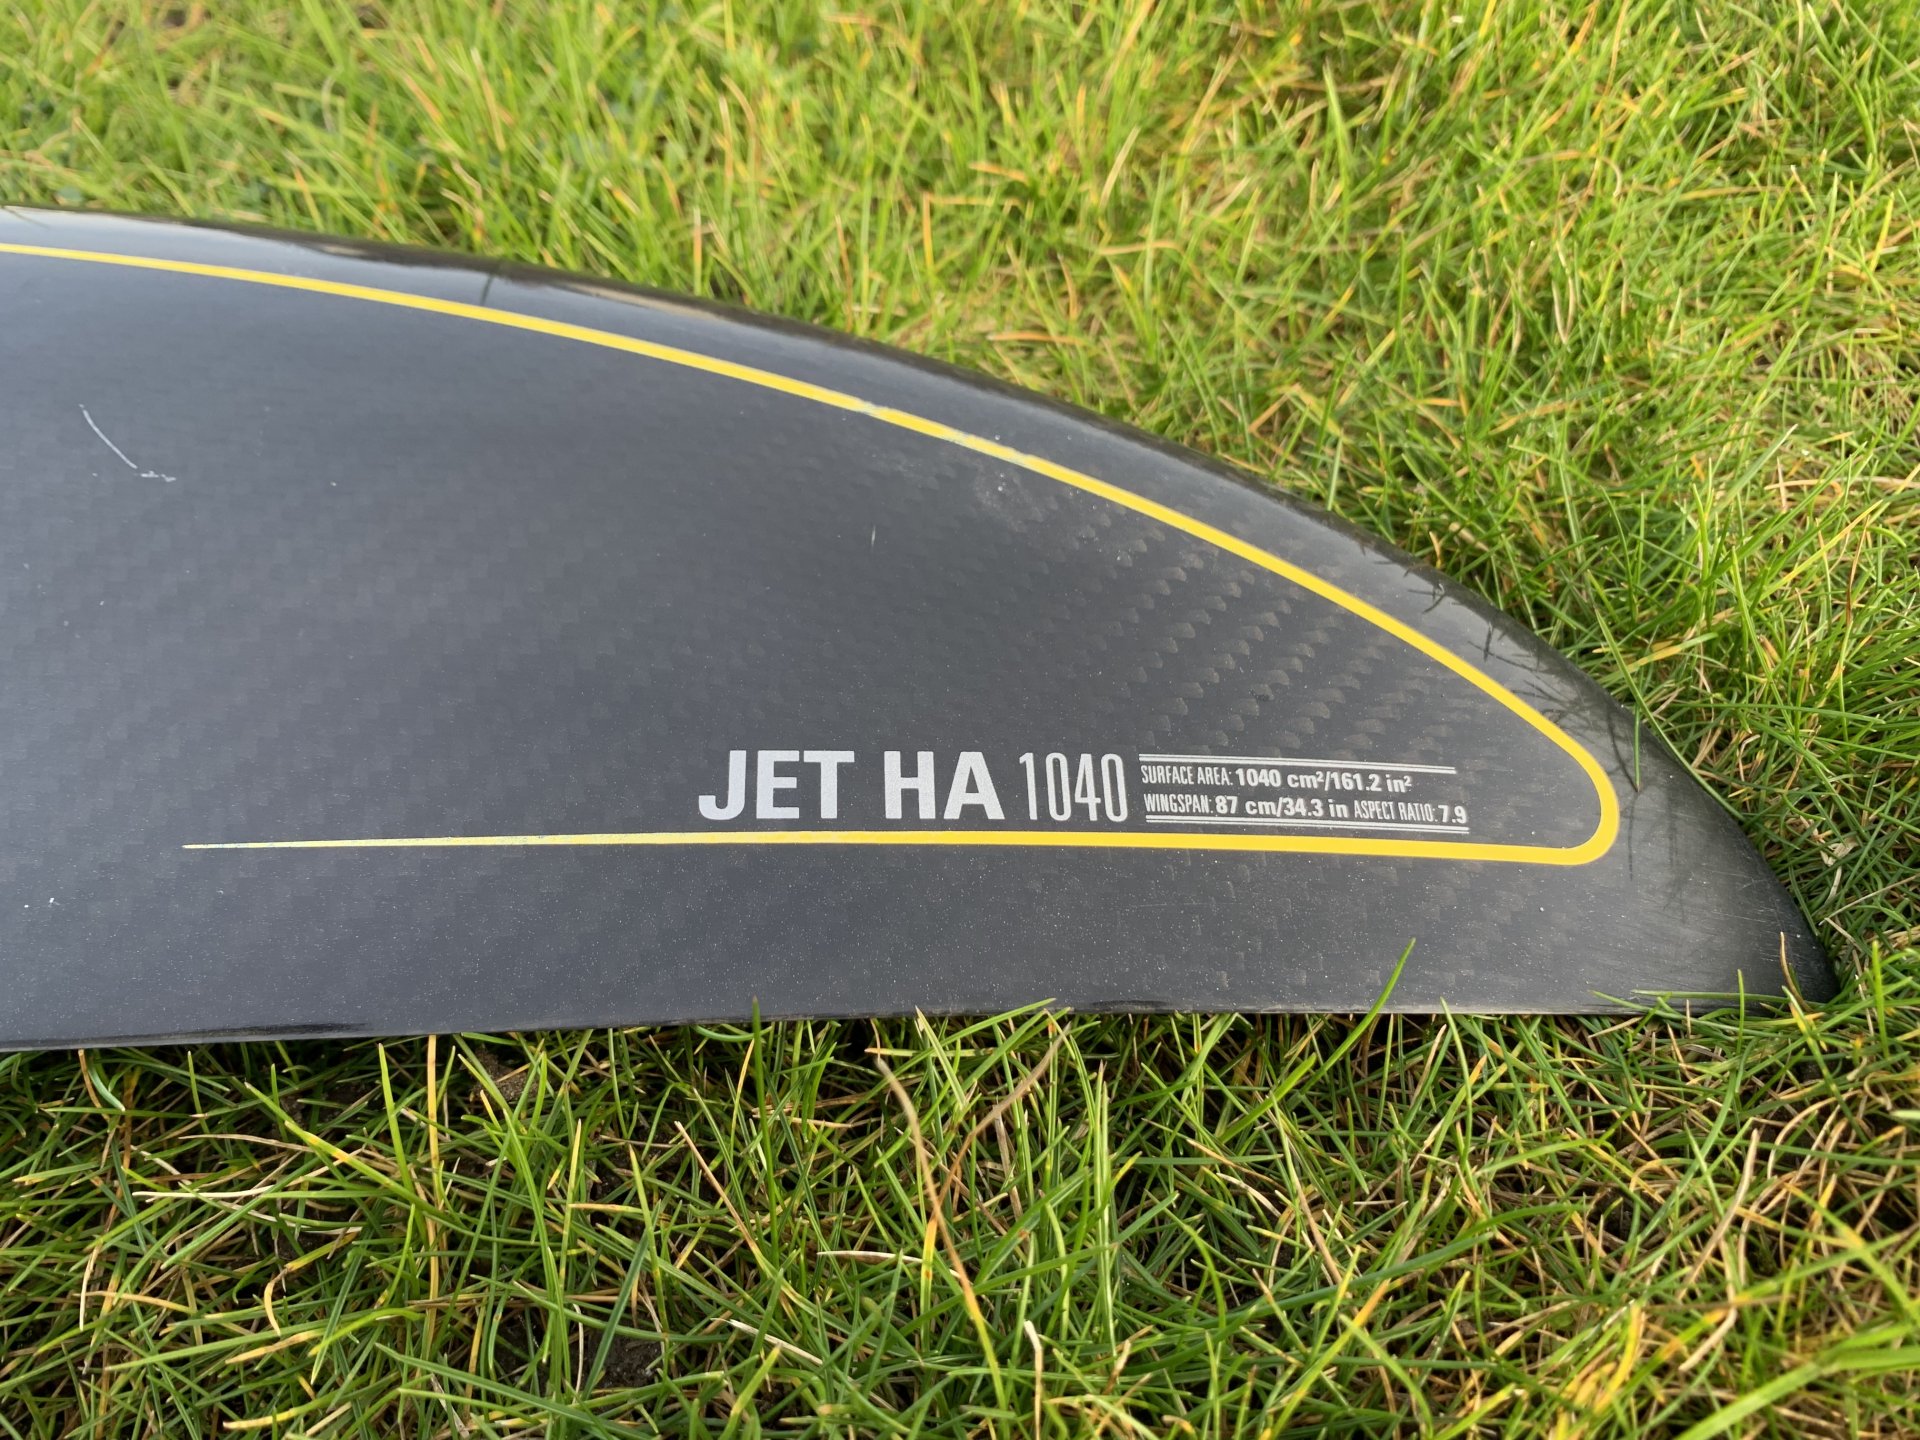 Naish Jet HA 1040 2022 | Wing Foiling, SUP And Surf Reviews 